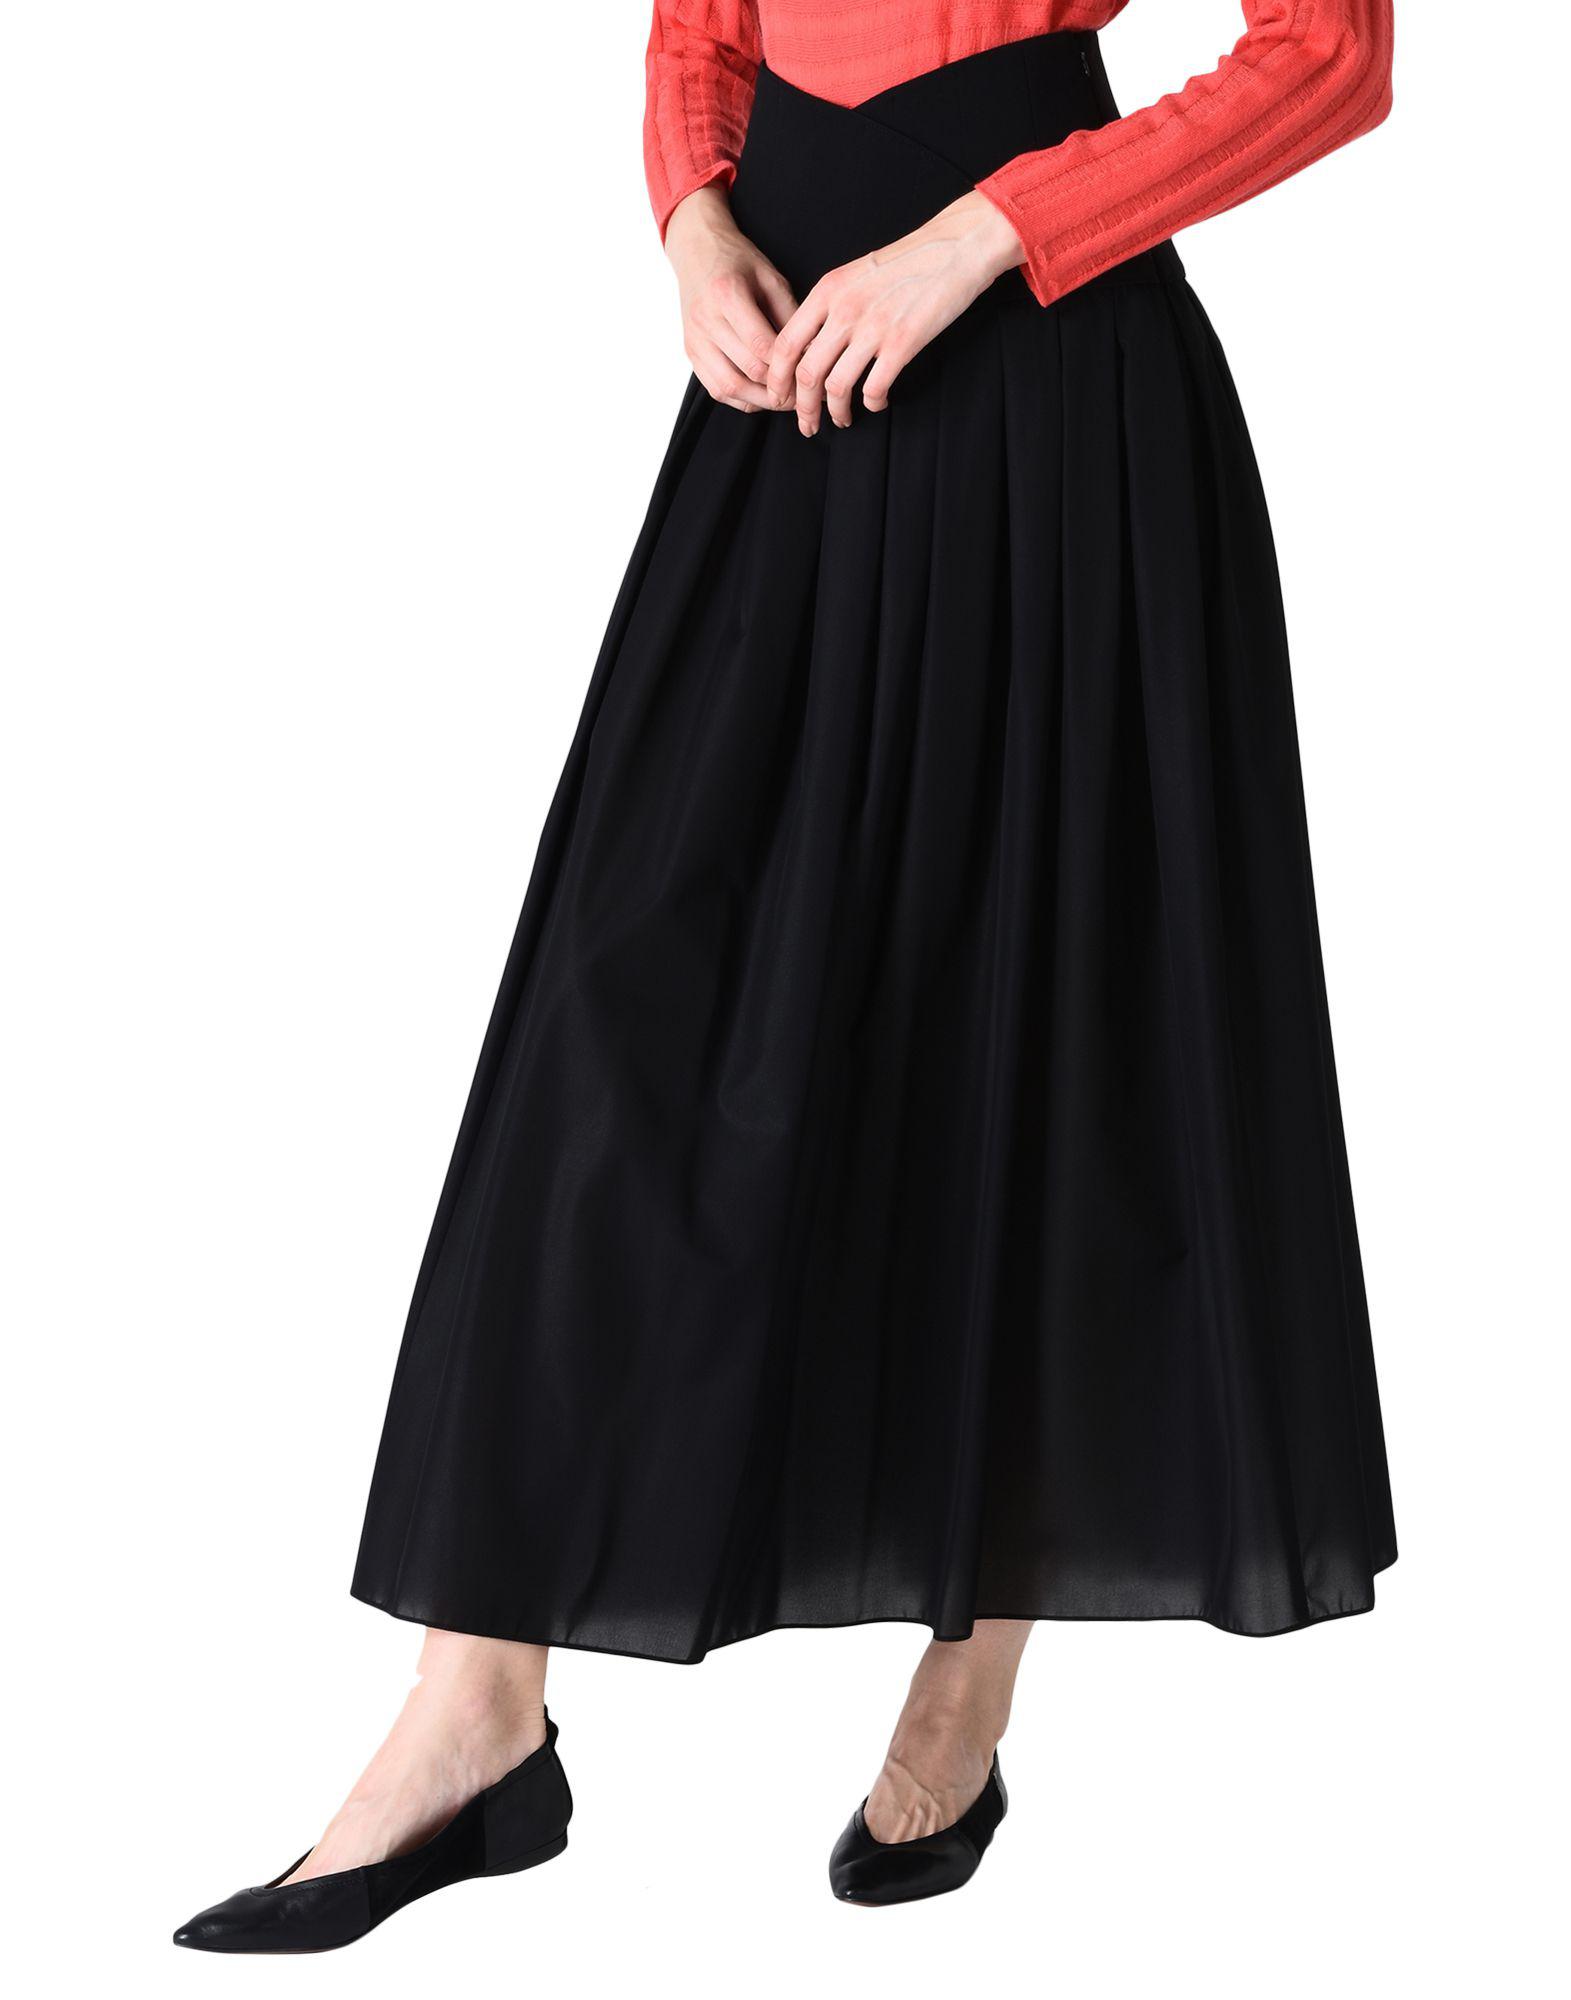 Giorgio Armani Wool 3/4 Length Skirt in Black - Lyst